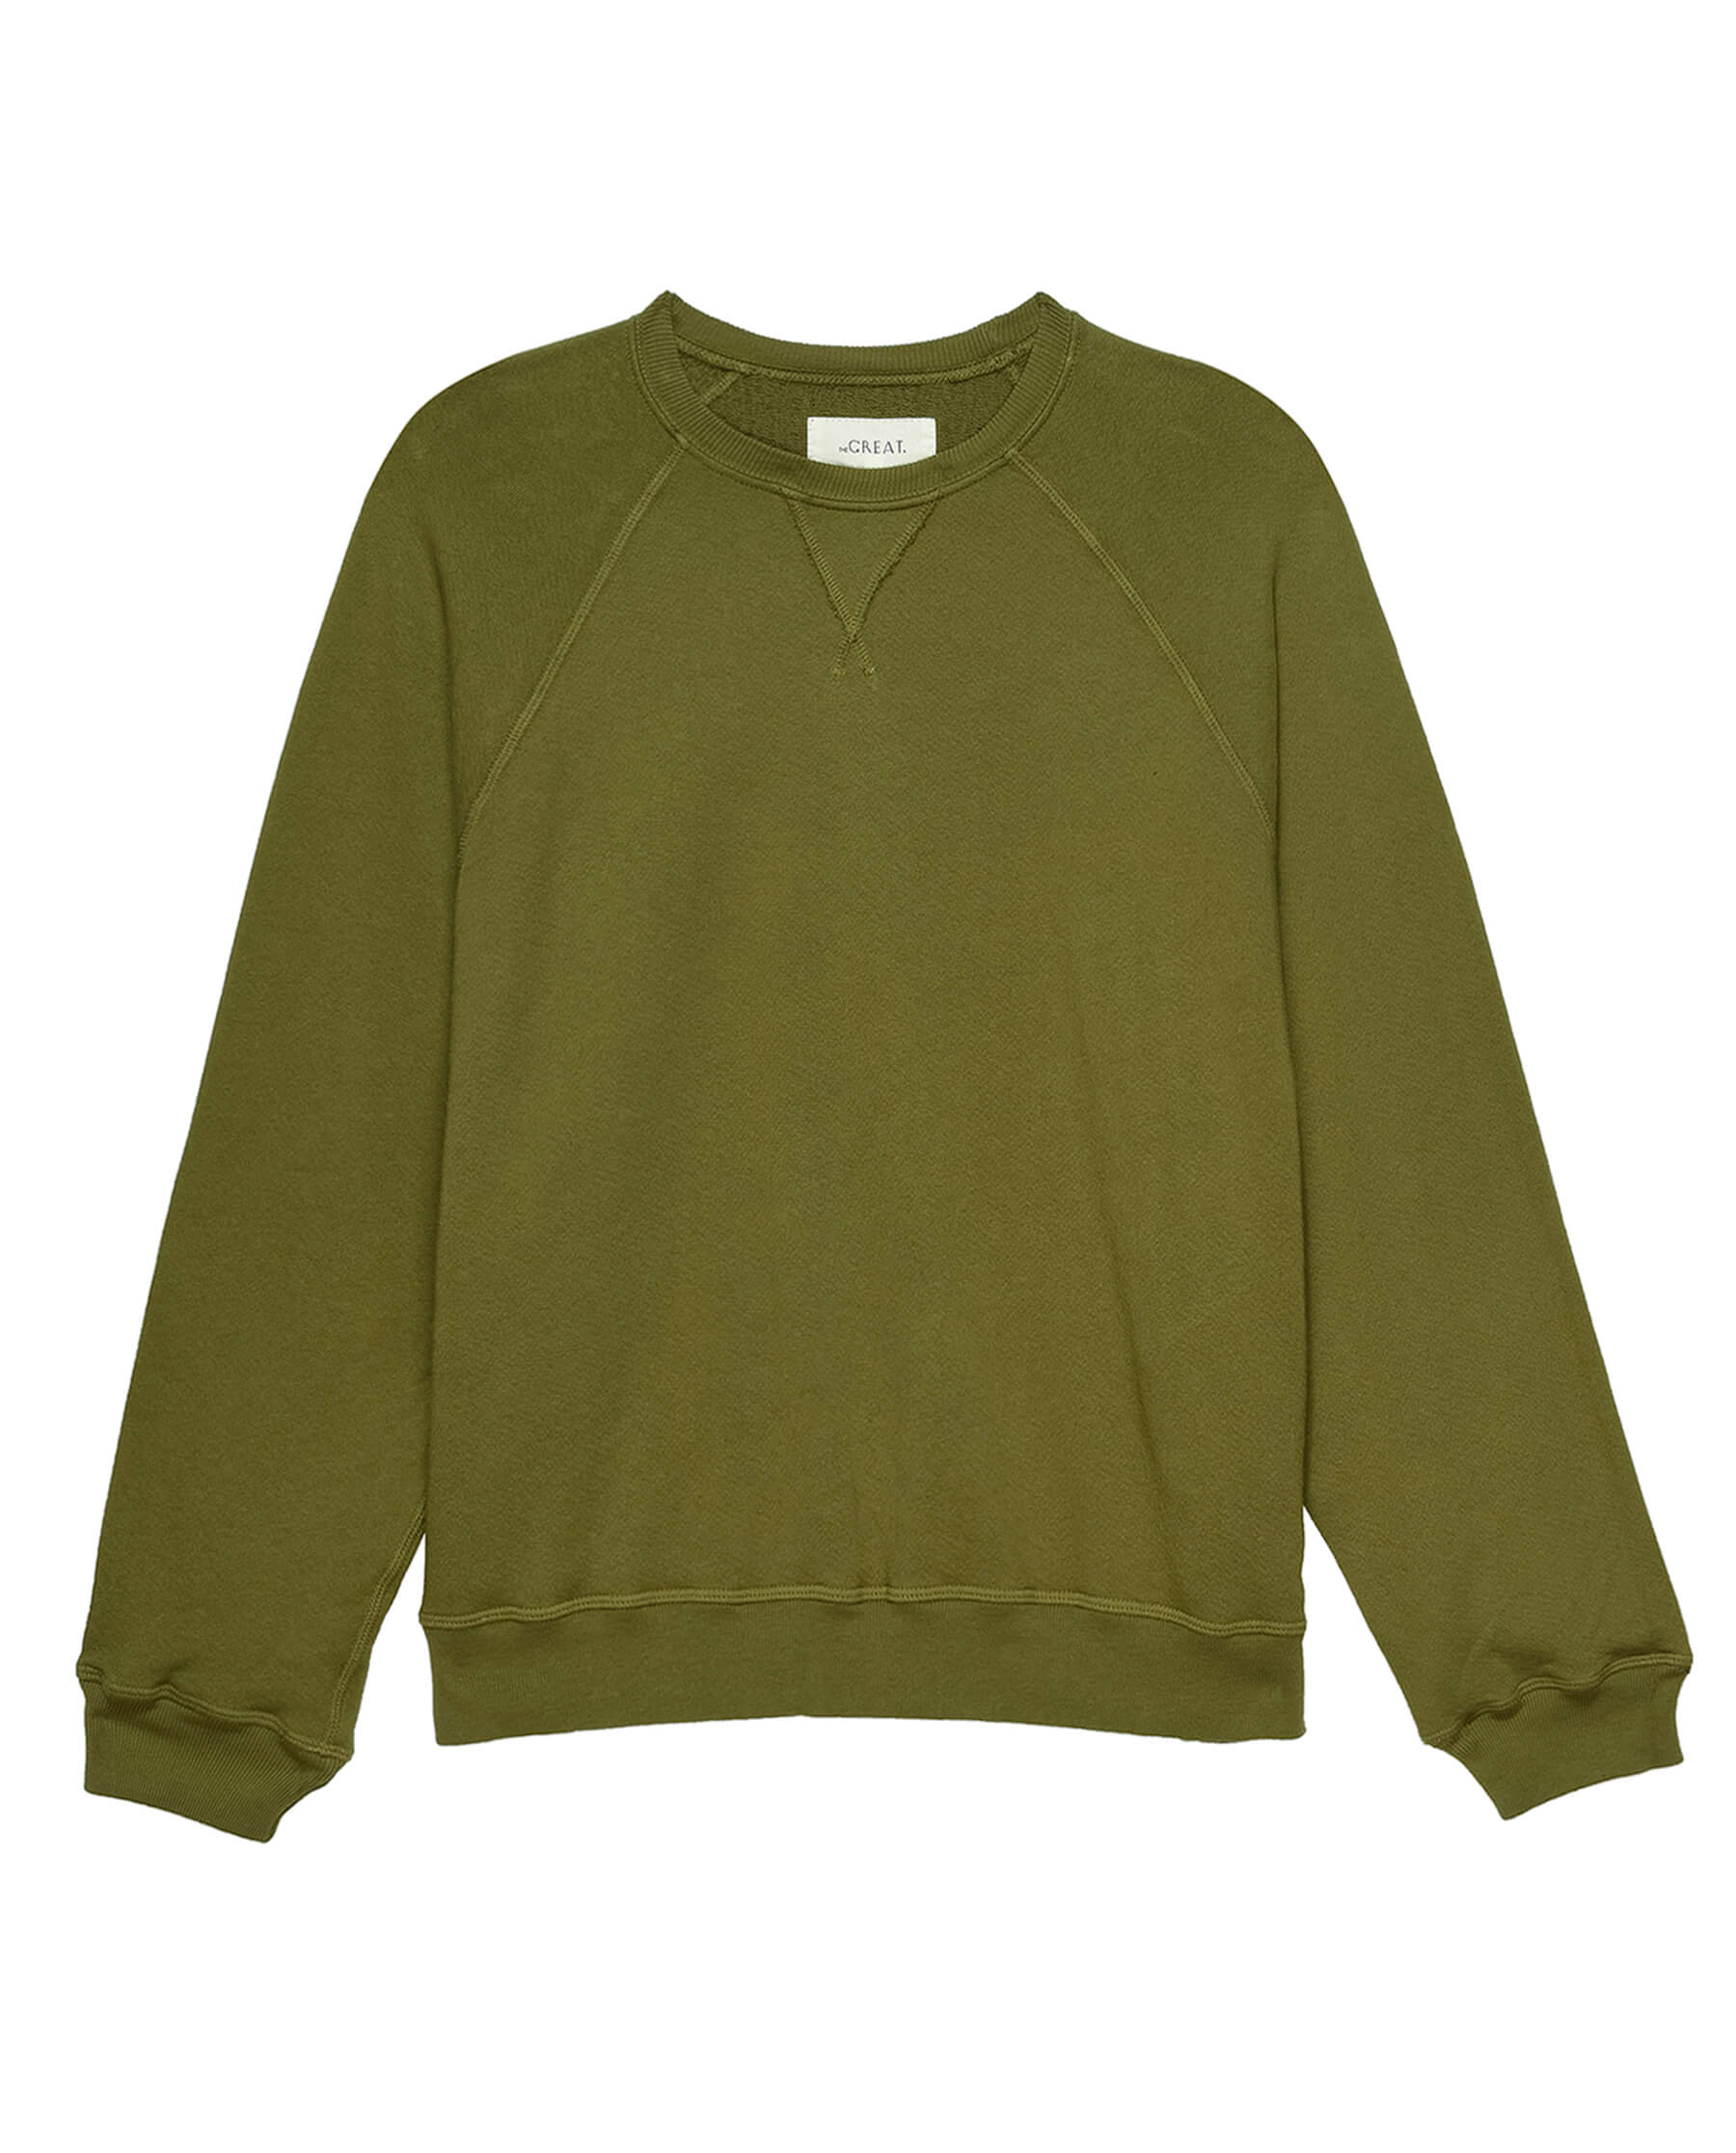 The Slouch Sweatshirt. Solid -- Fir Green